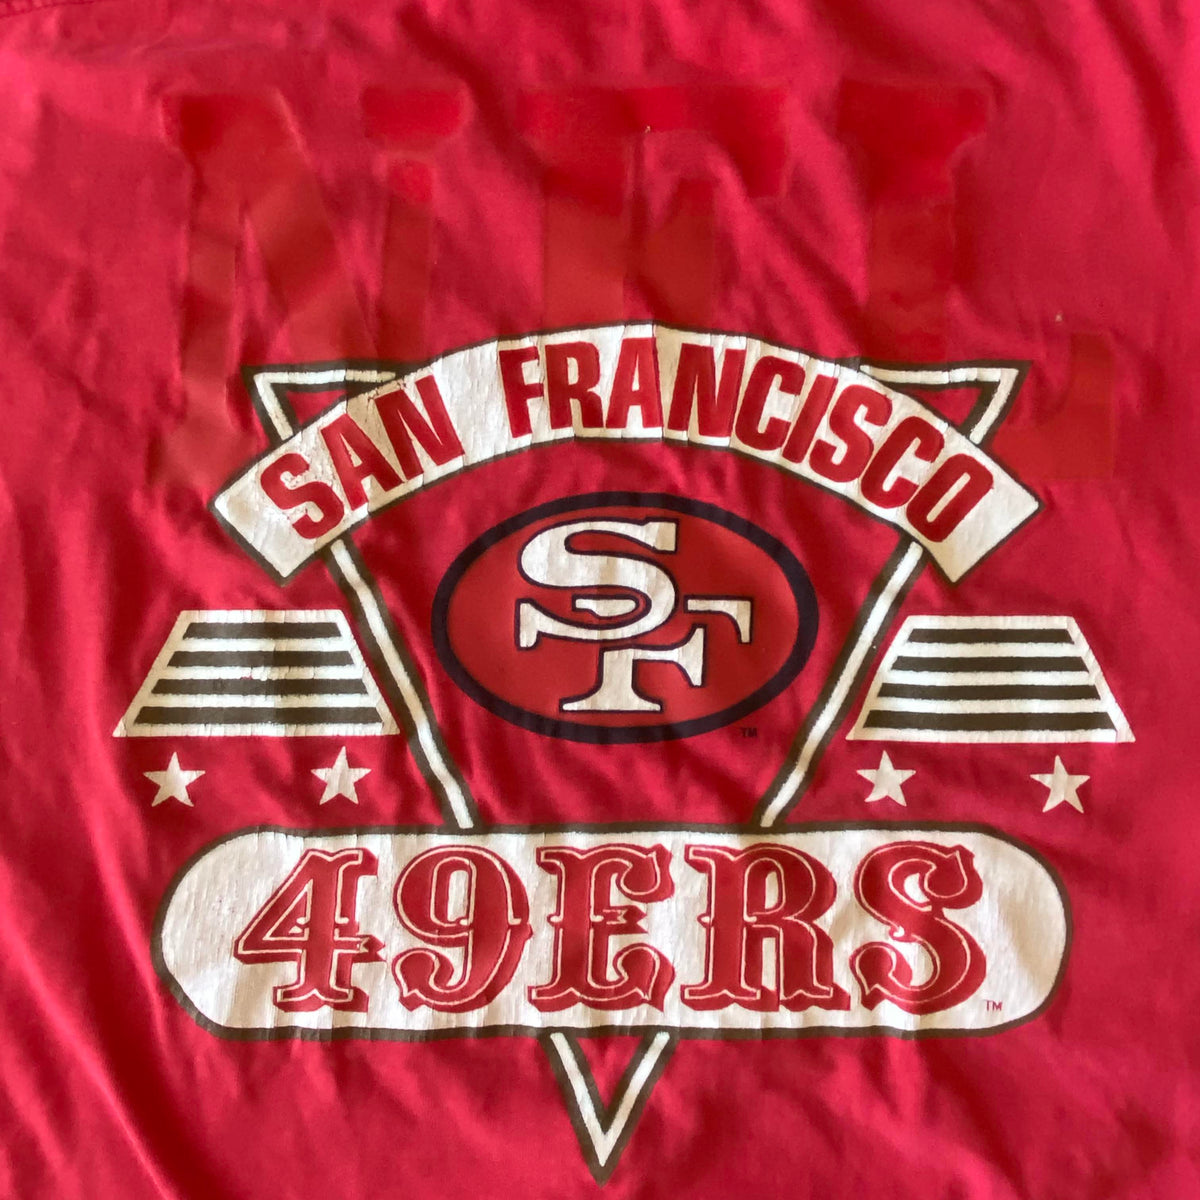 San Francisco Giants – San Francisco 49ers Tee Shirt - Yesweli